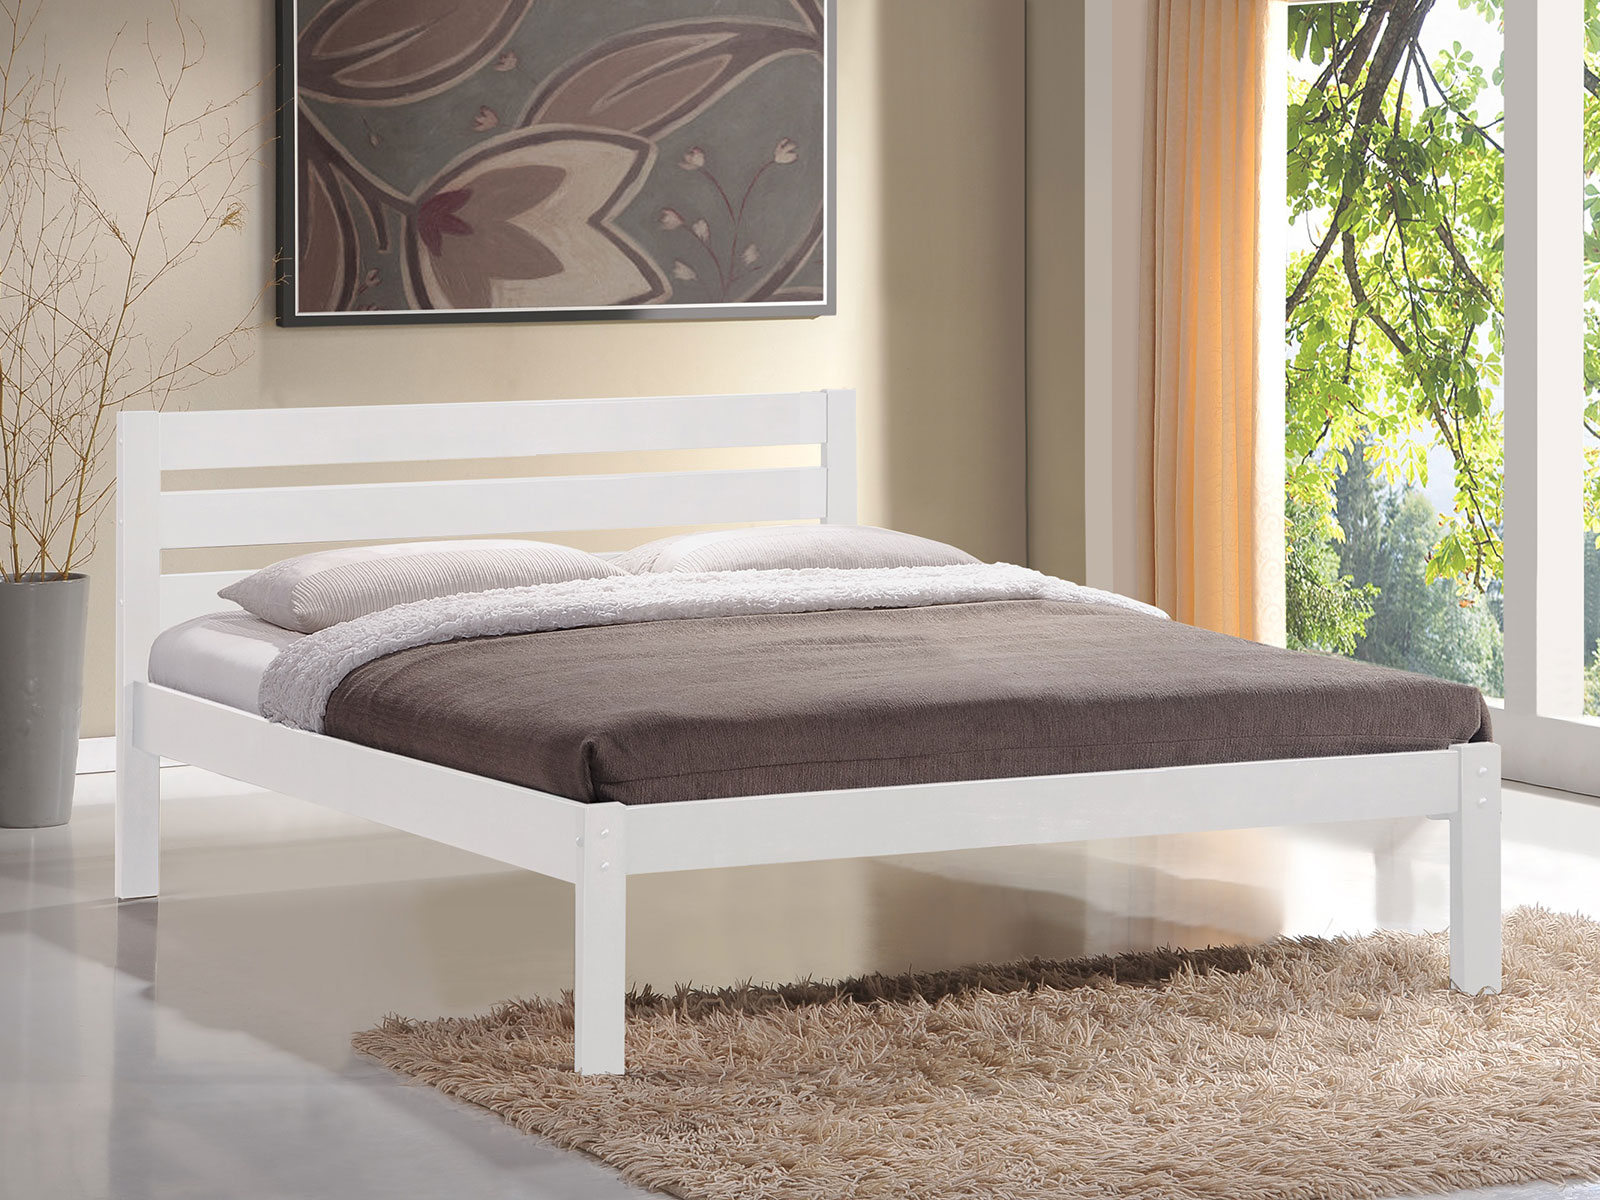 3ft Single Flintshire Furniture Eco Bed in a Box Bedstead